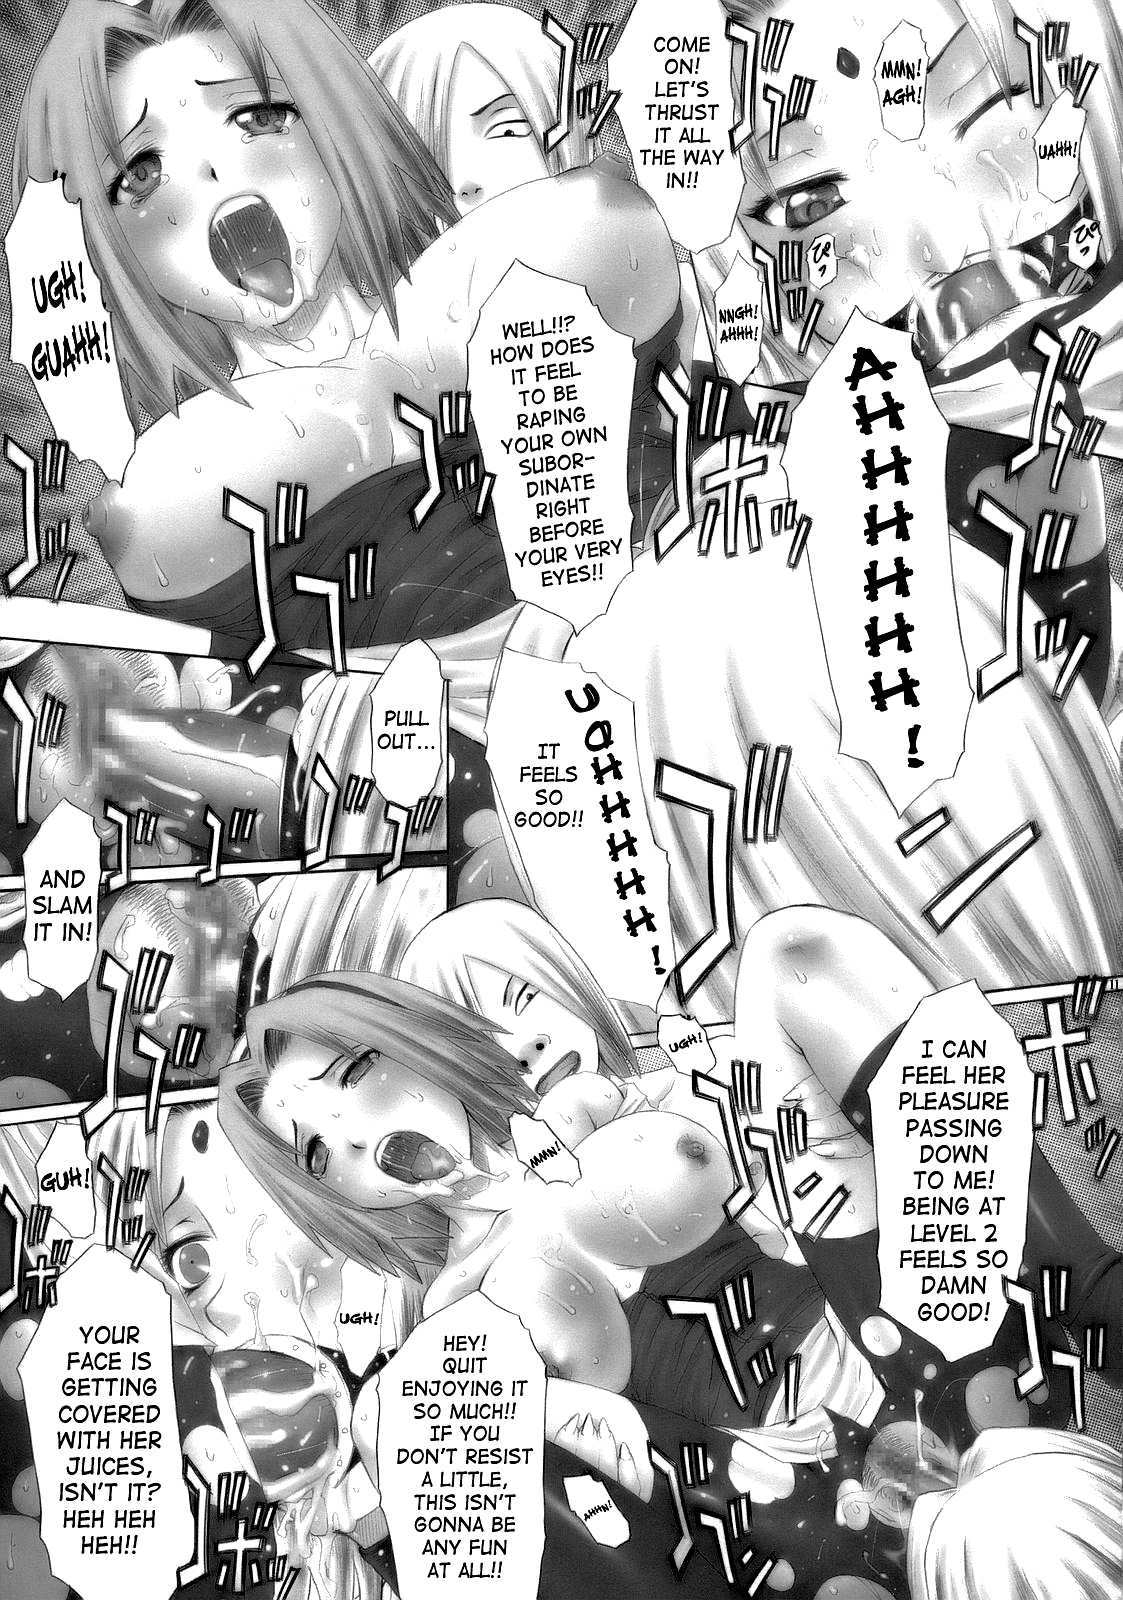 PM 11 - Indecent Ninja Slave naruto 9 hentai manga